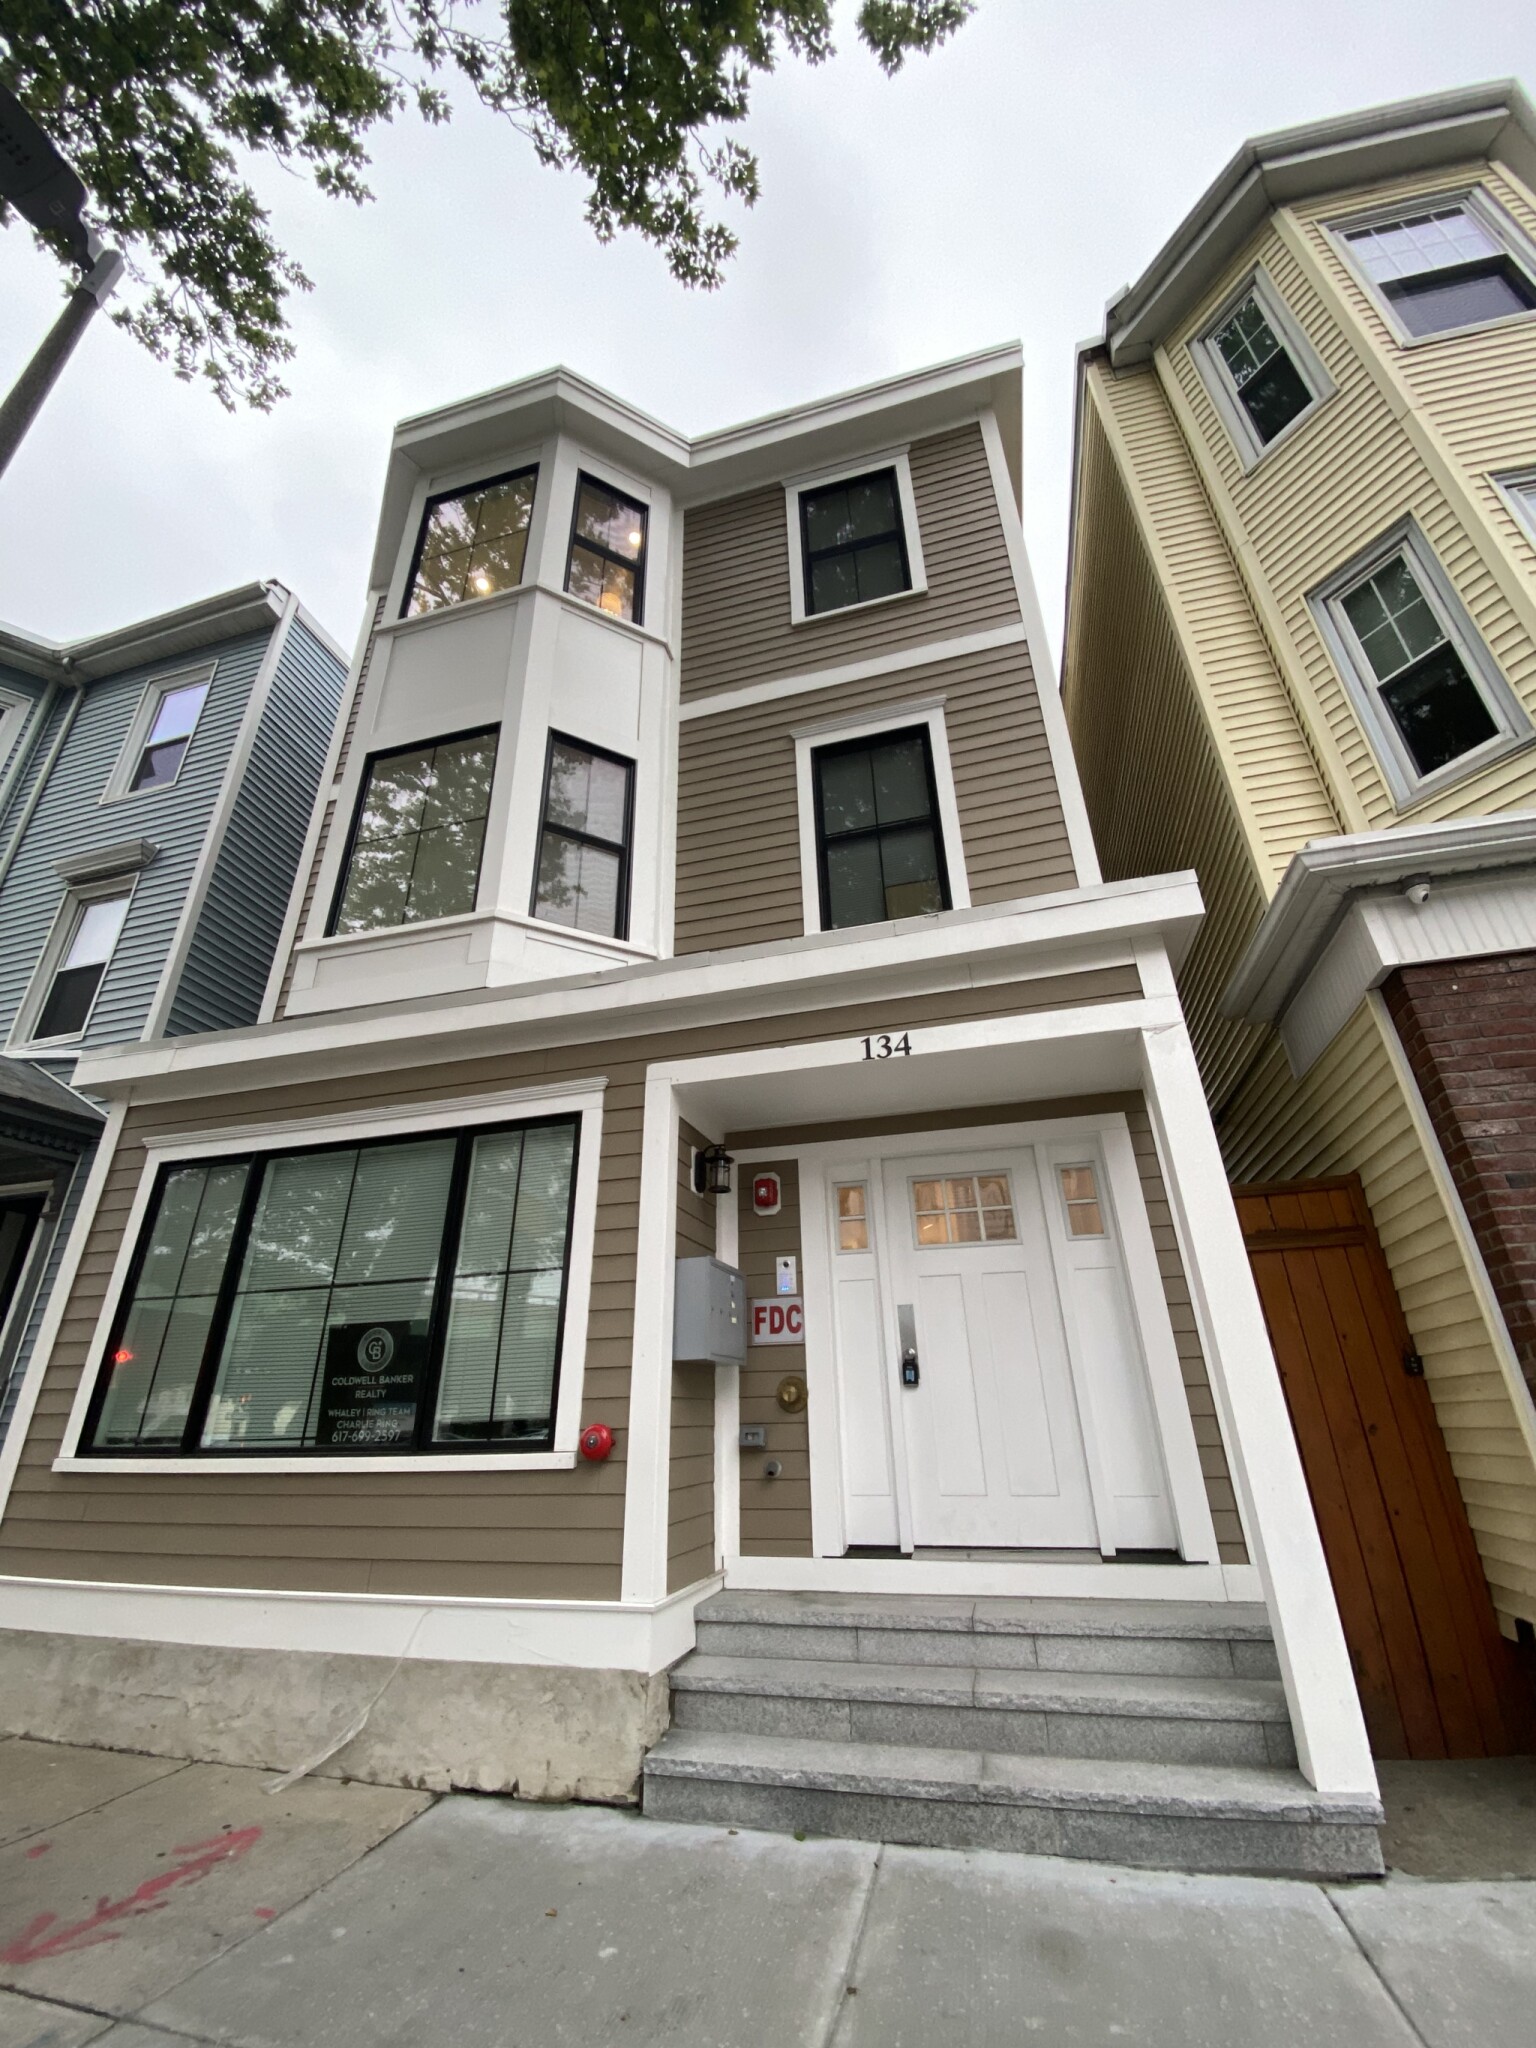 Photos of apartment on Gove St.,Boston MA 02128